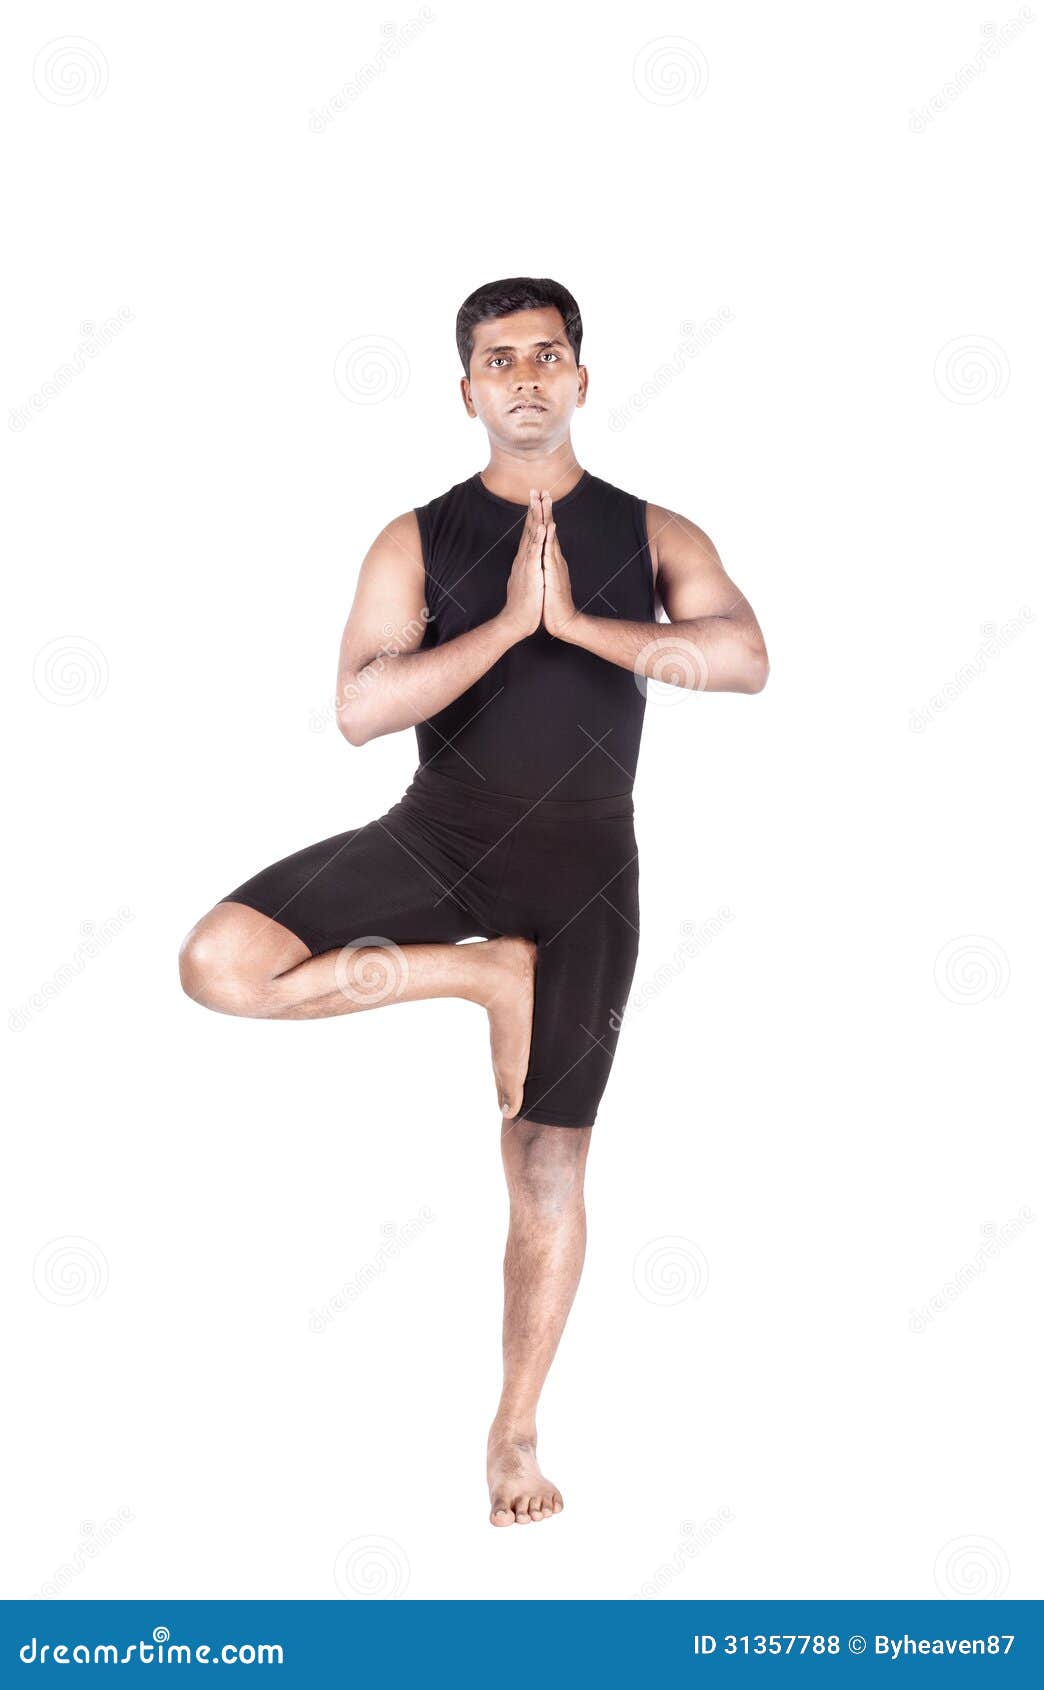 Image result for indian man pose